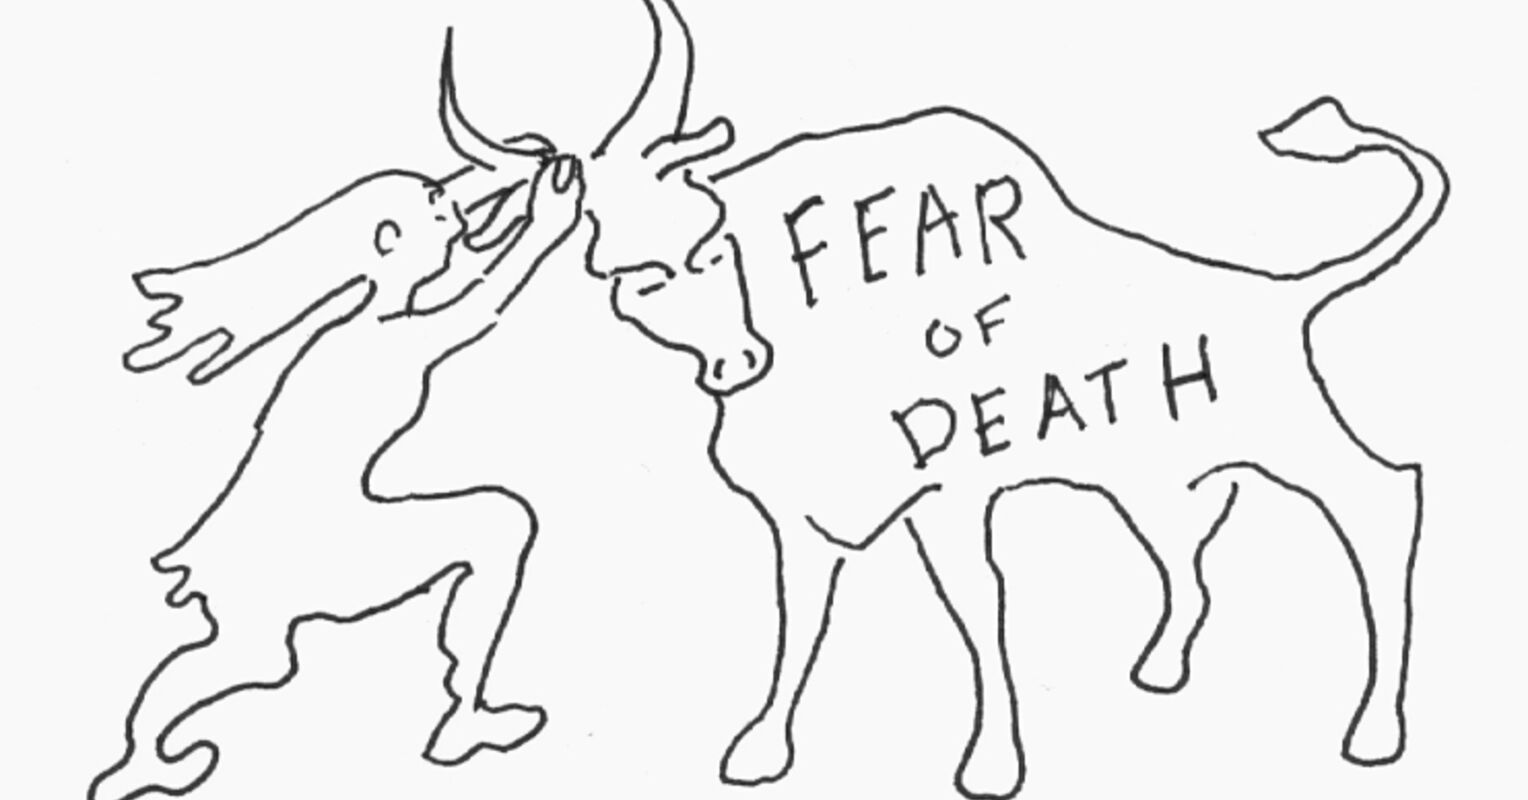 pathological fear of death